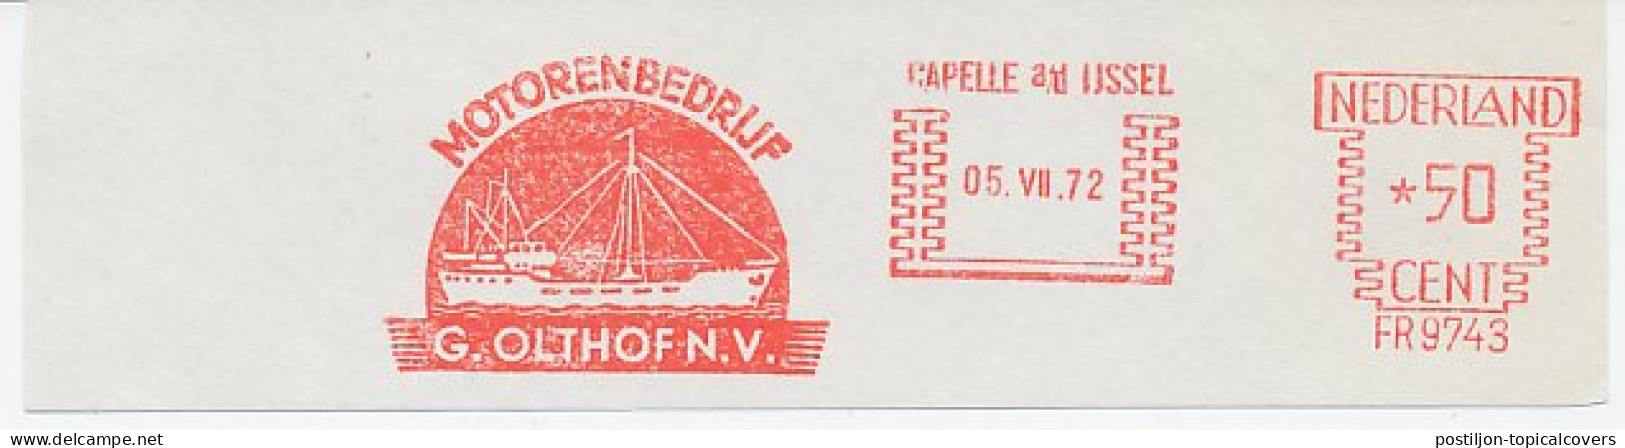 Meter Cut Netherlands 1972 Cargo Ship - Ships